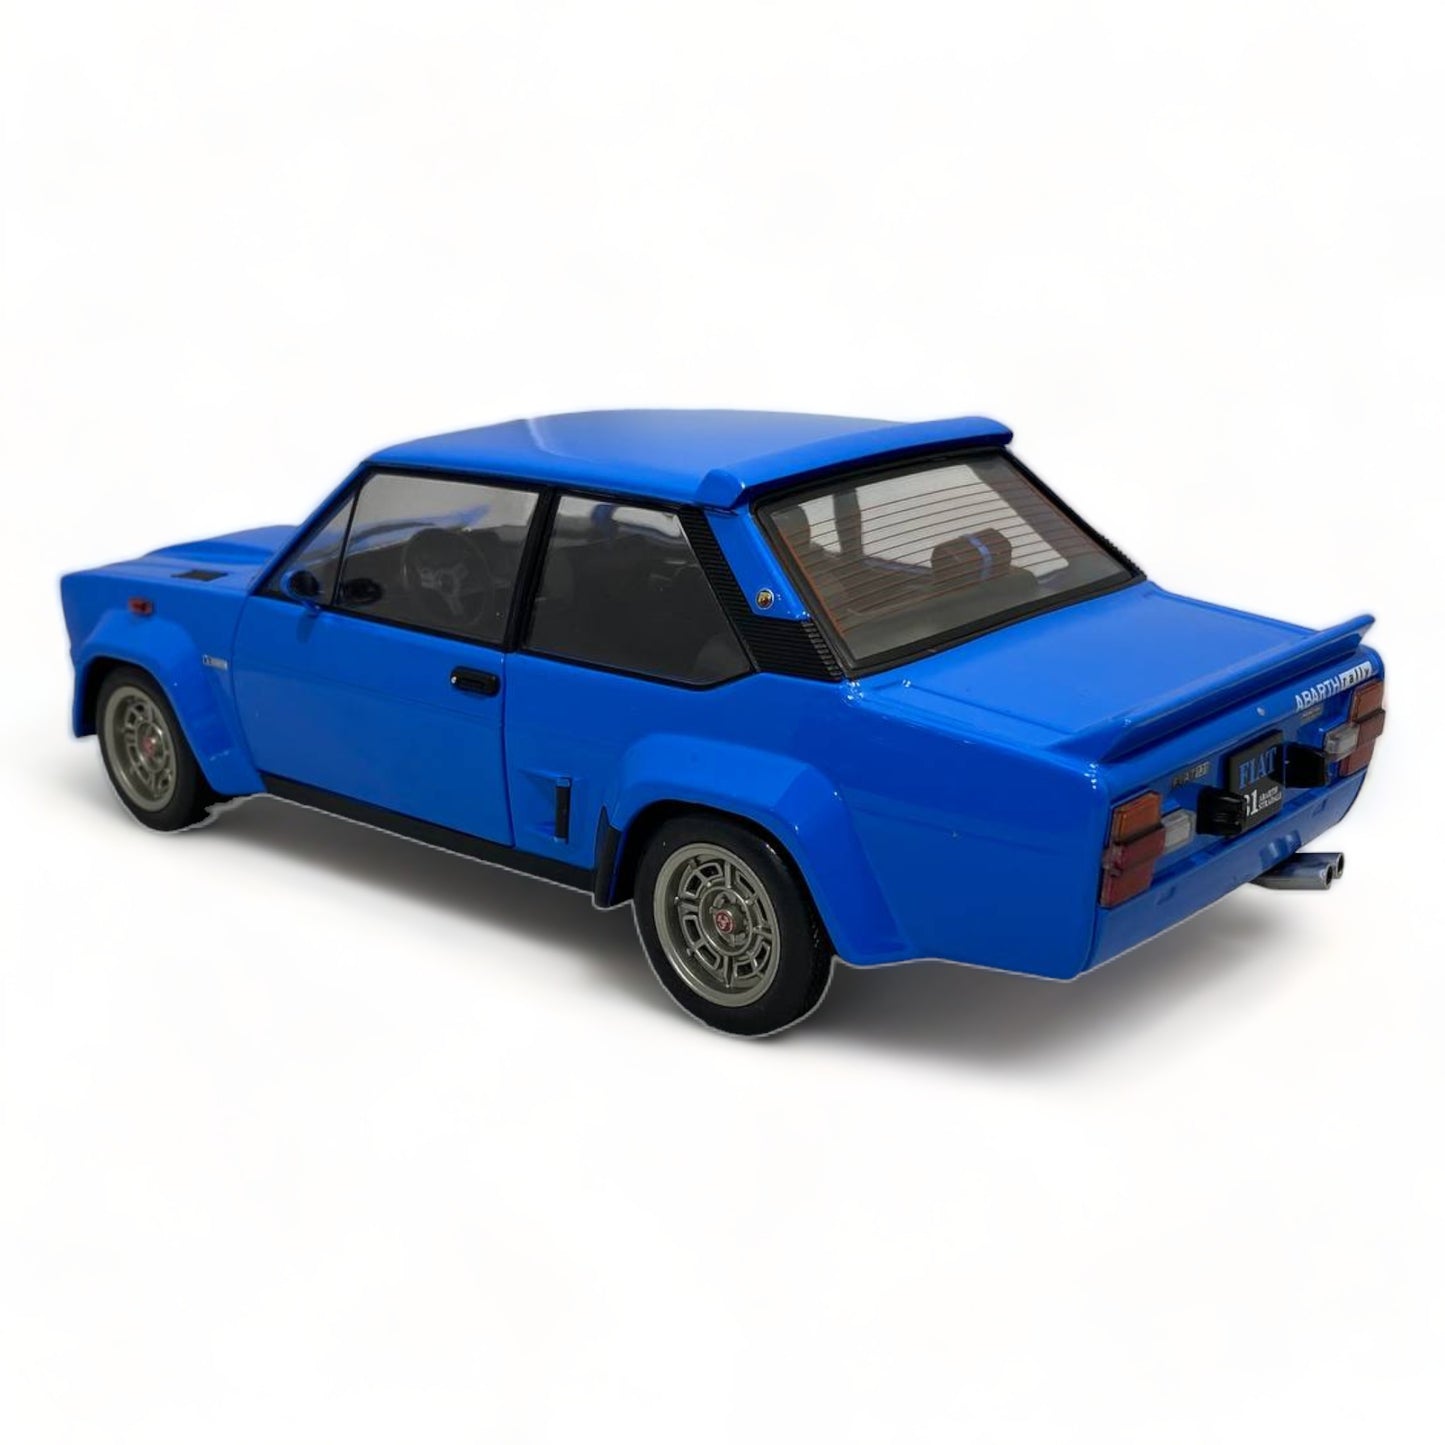 1/18 Solido FIAT 131 ABARTH BLUE 1980|Sold in Dturman.com Dubai UAE.